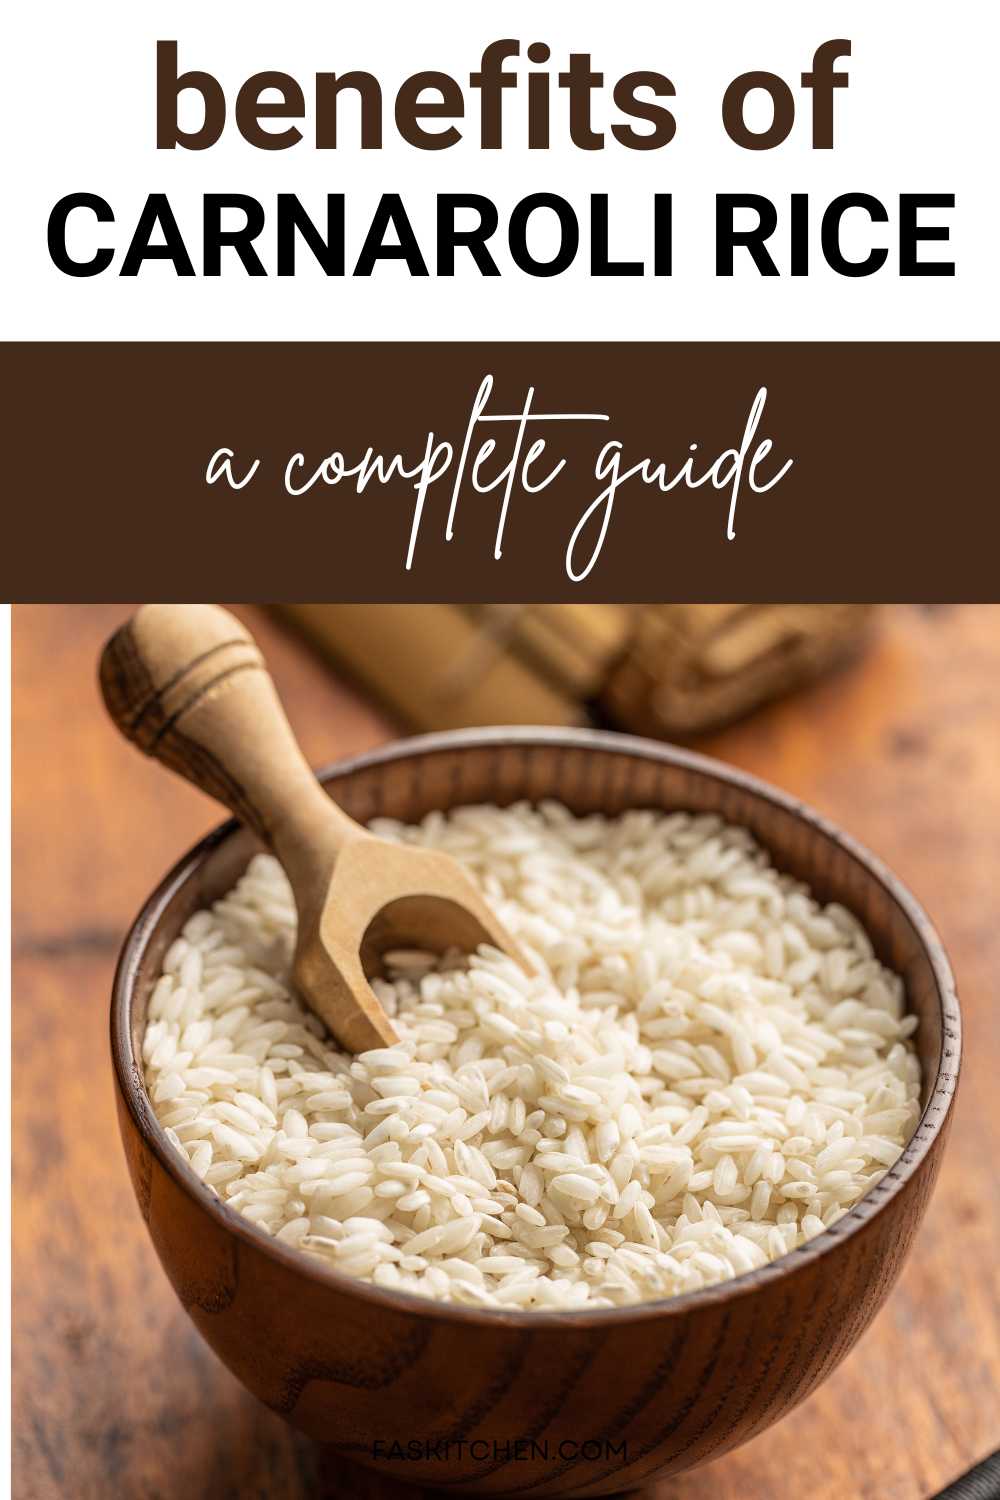 Carnaroli rice benefits